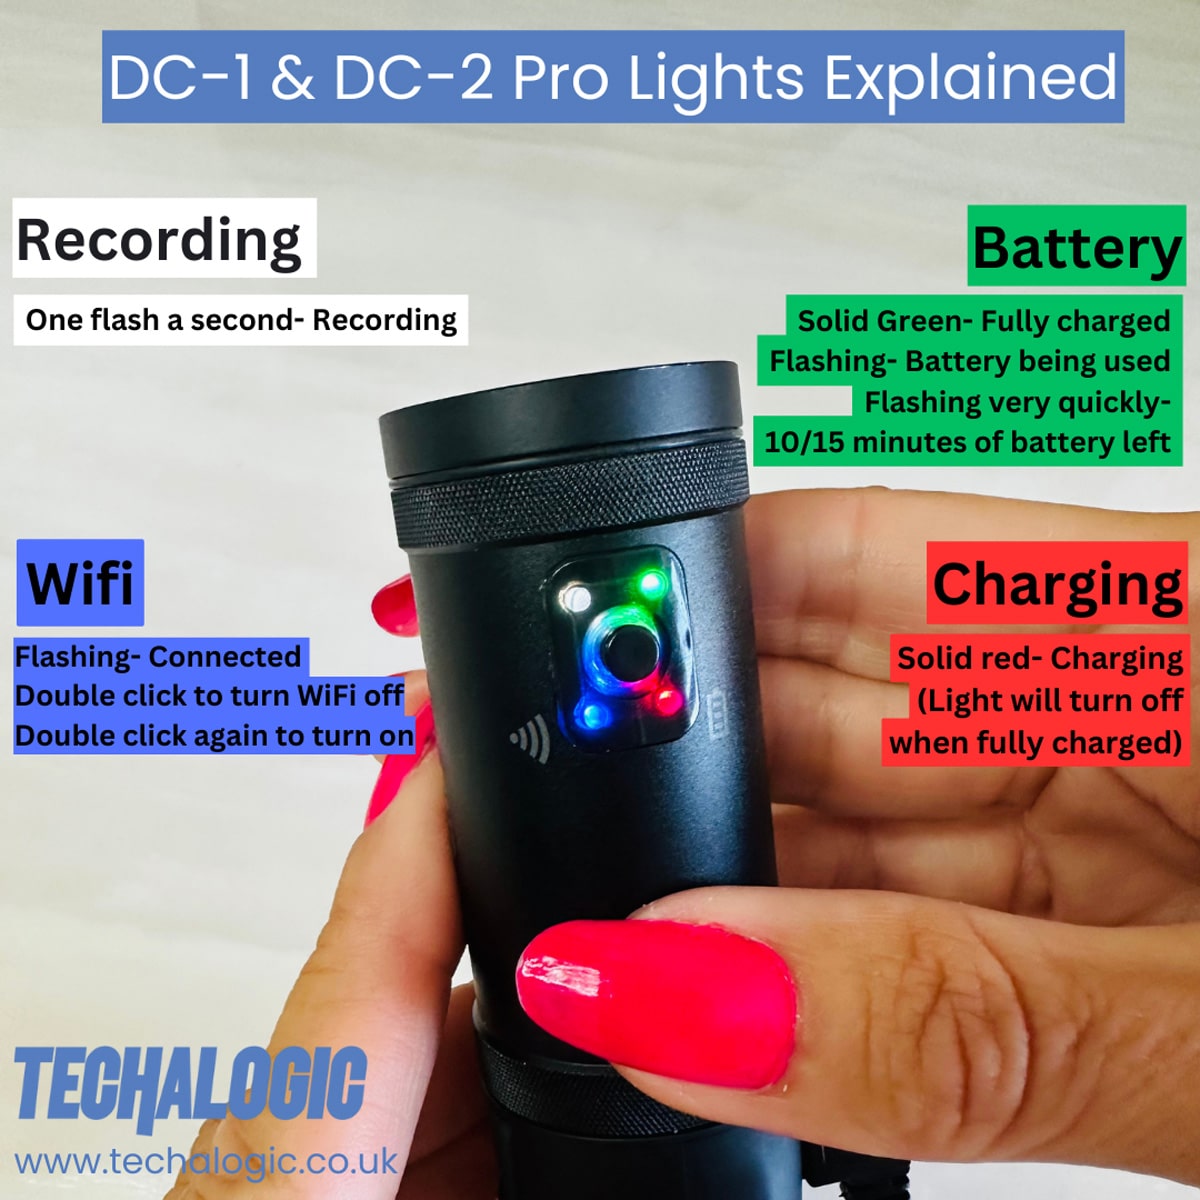 DC lights explained